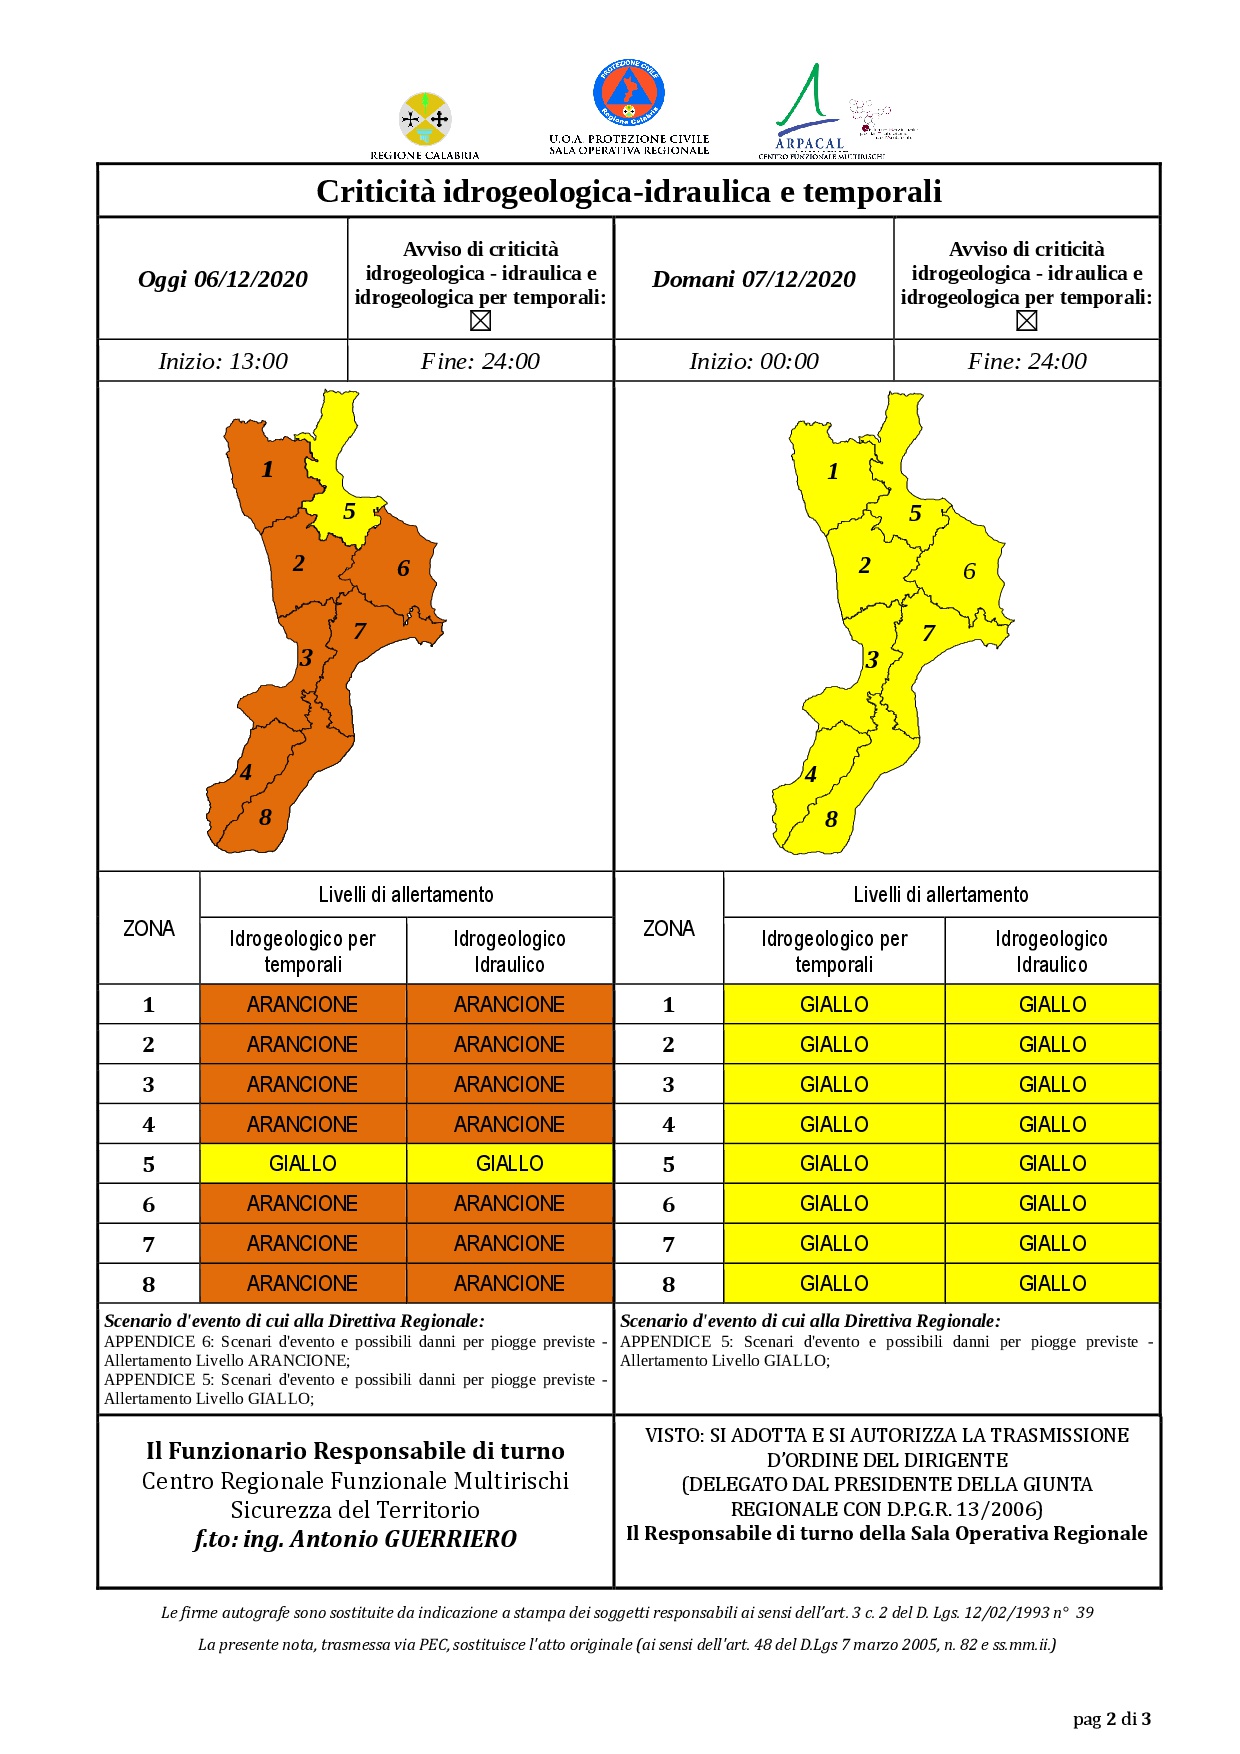 Criticità idrogeologica-idraulica e temporali in Calabria 06-12-2020